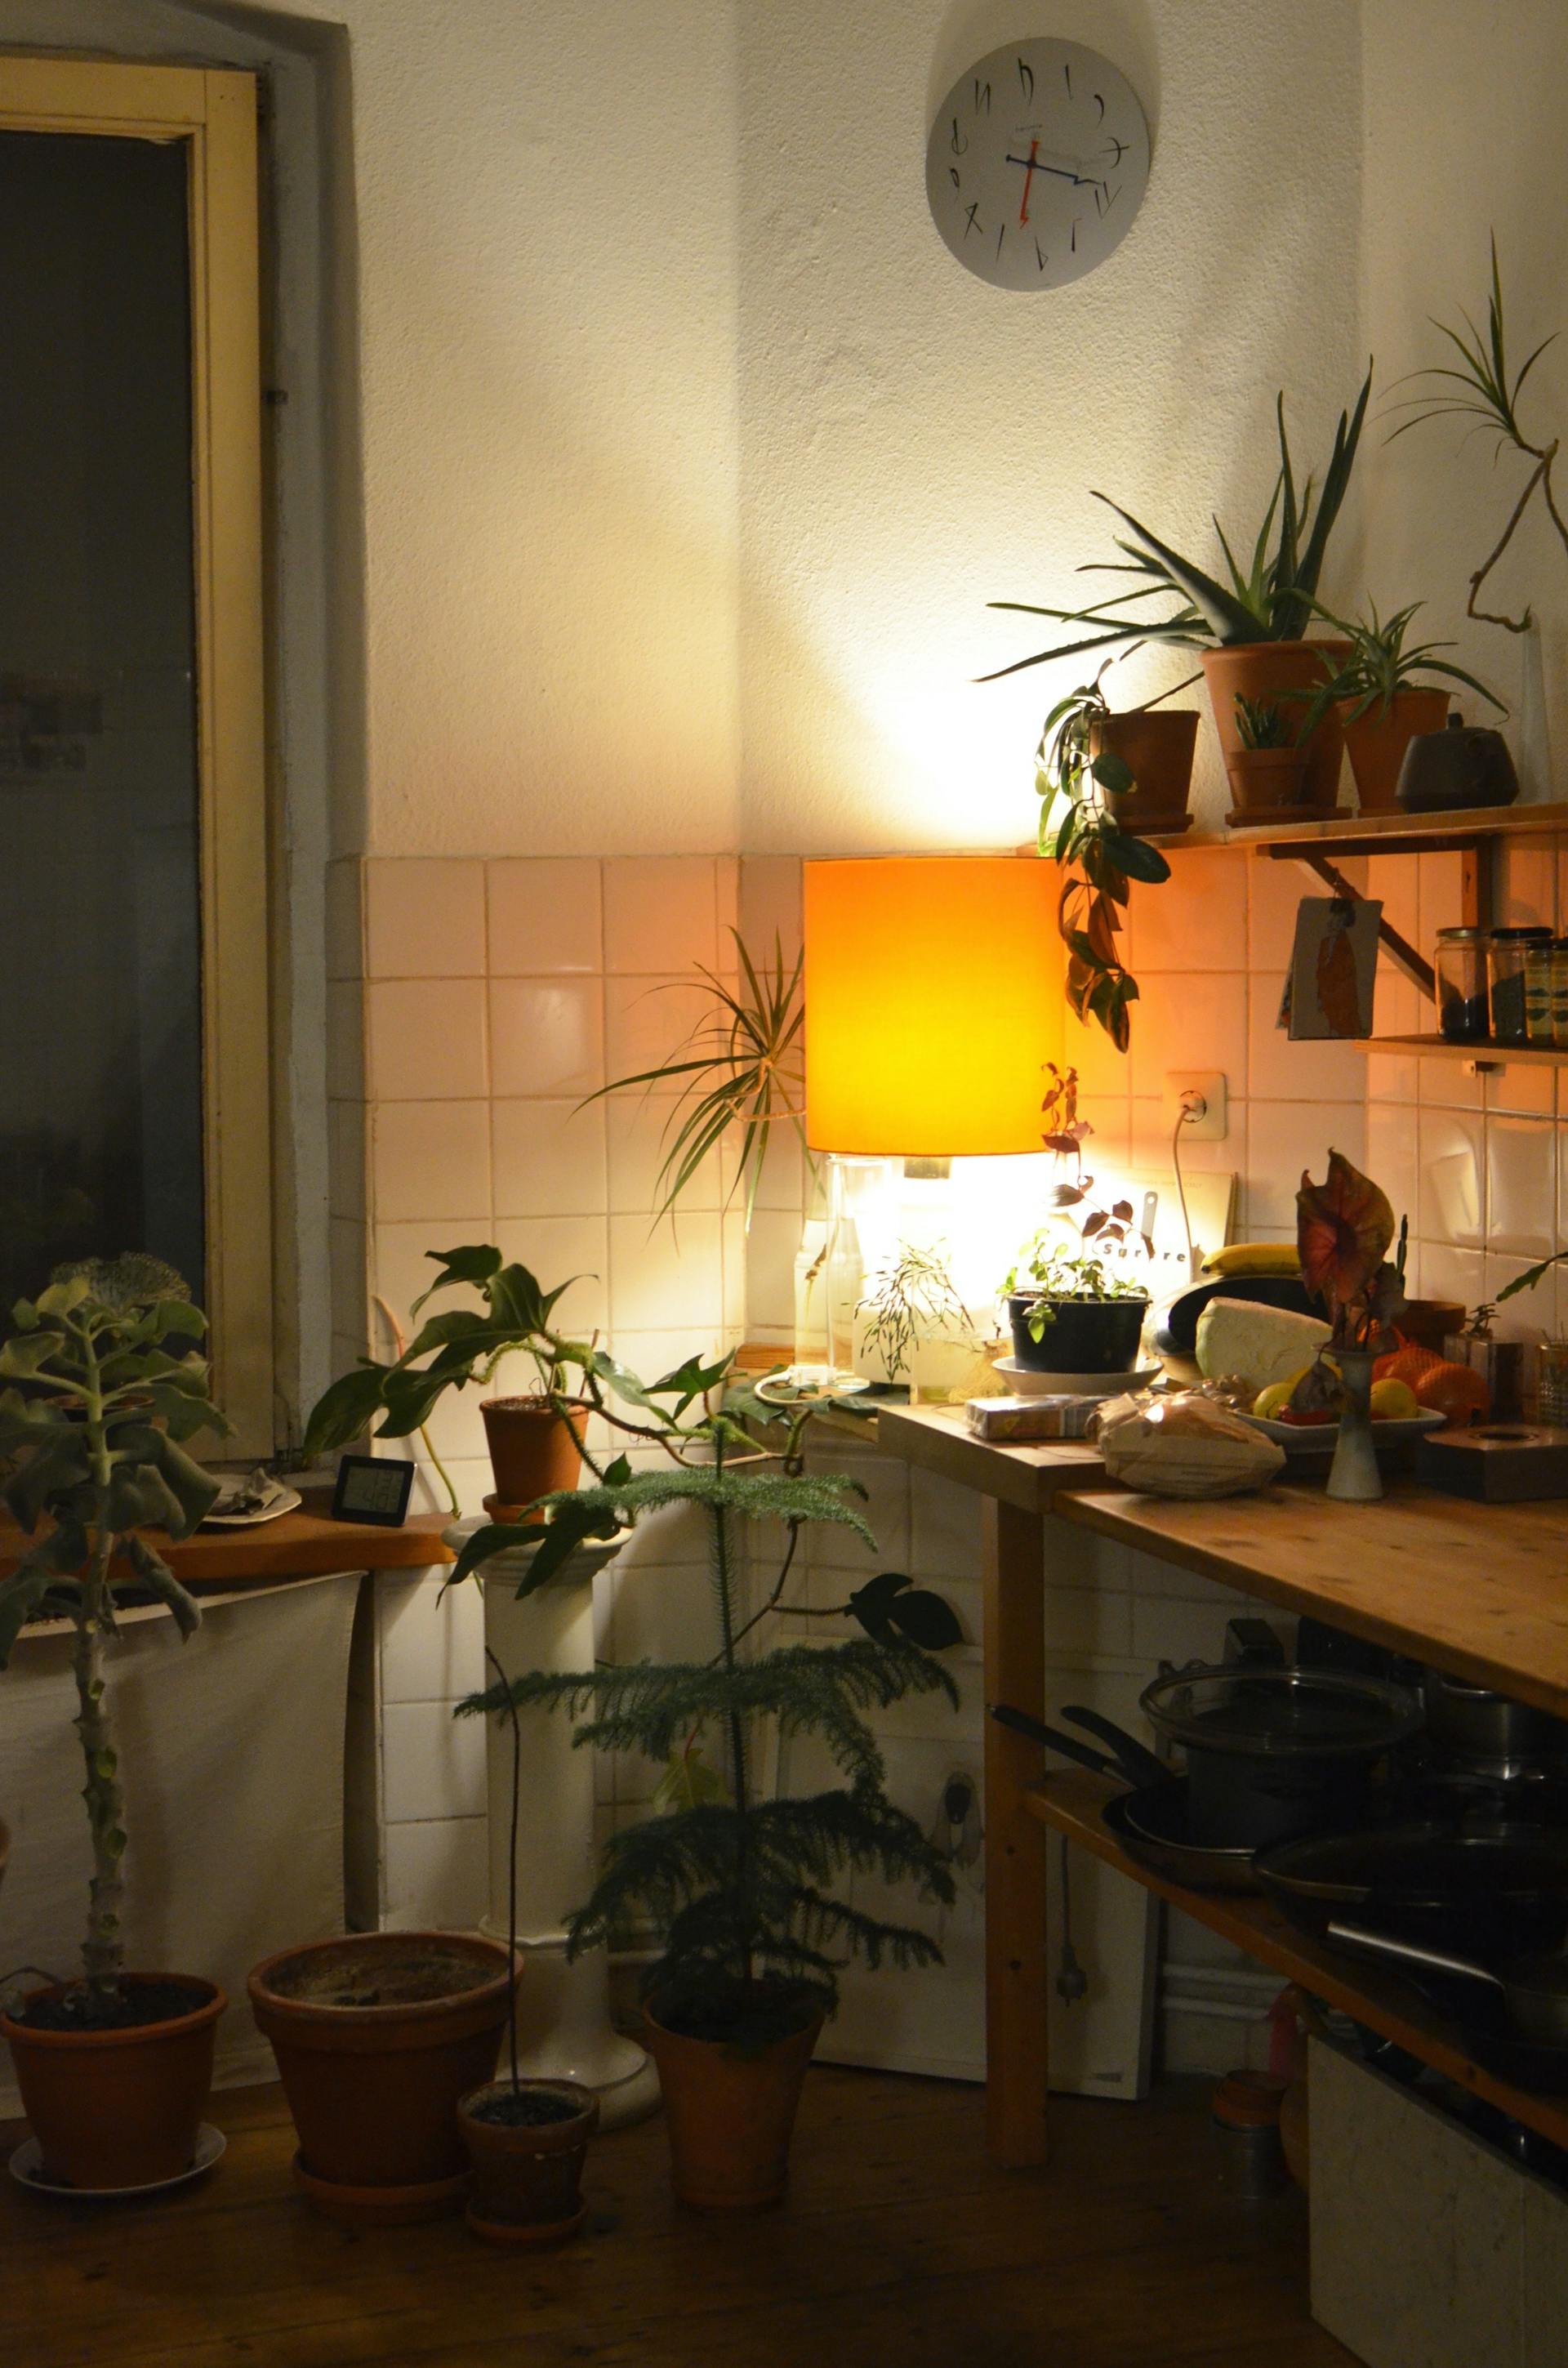 Inside a cozy kitchen | Source: Pexels